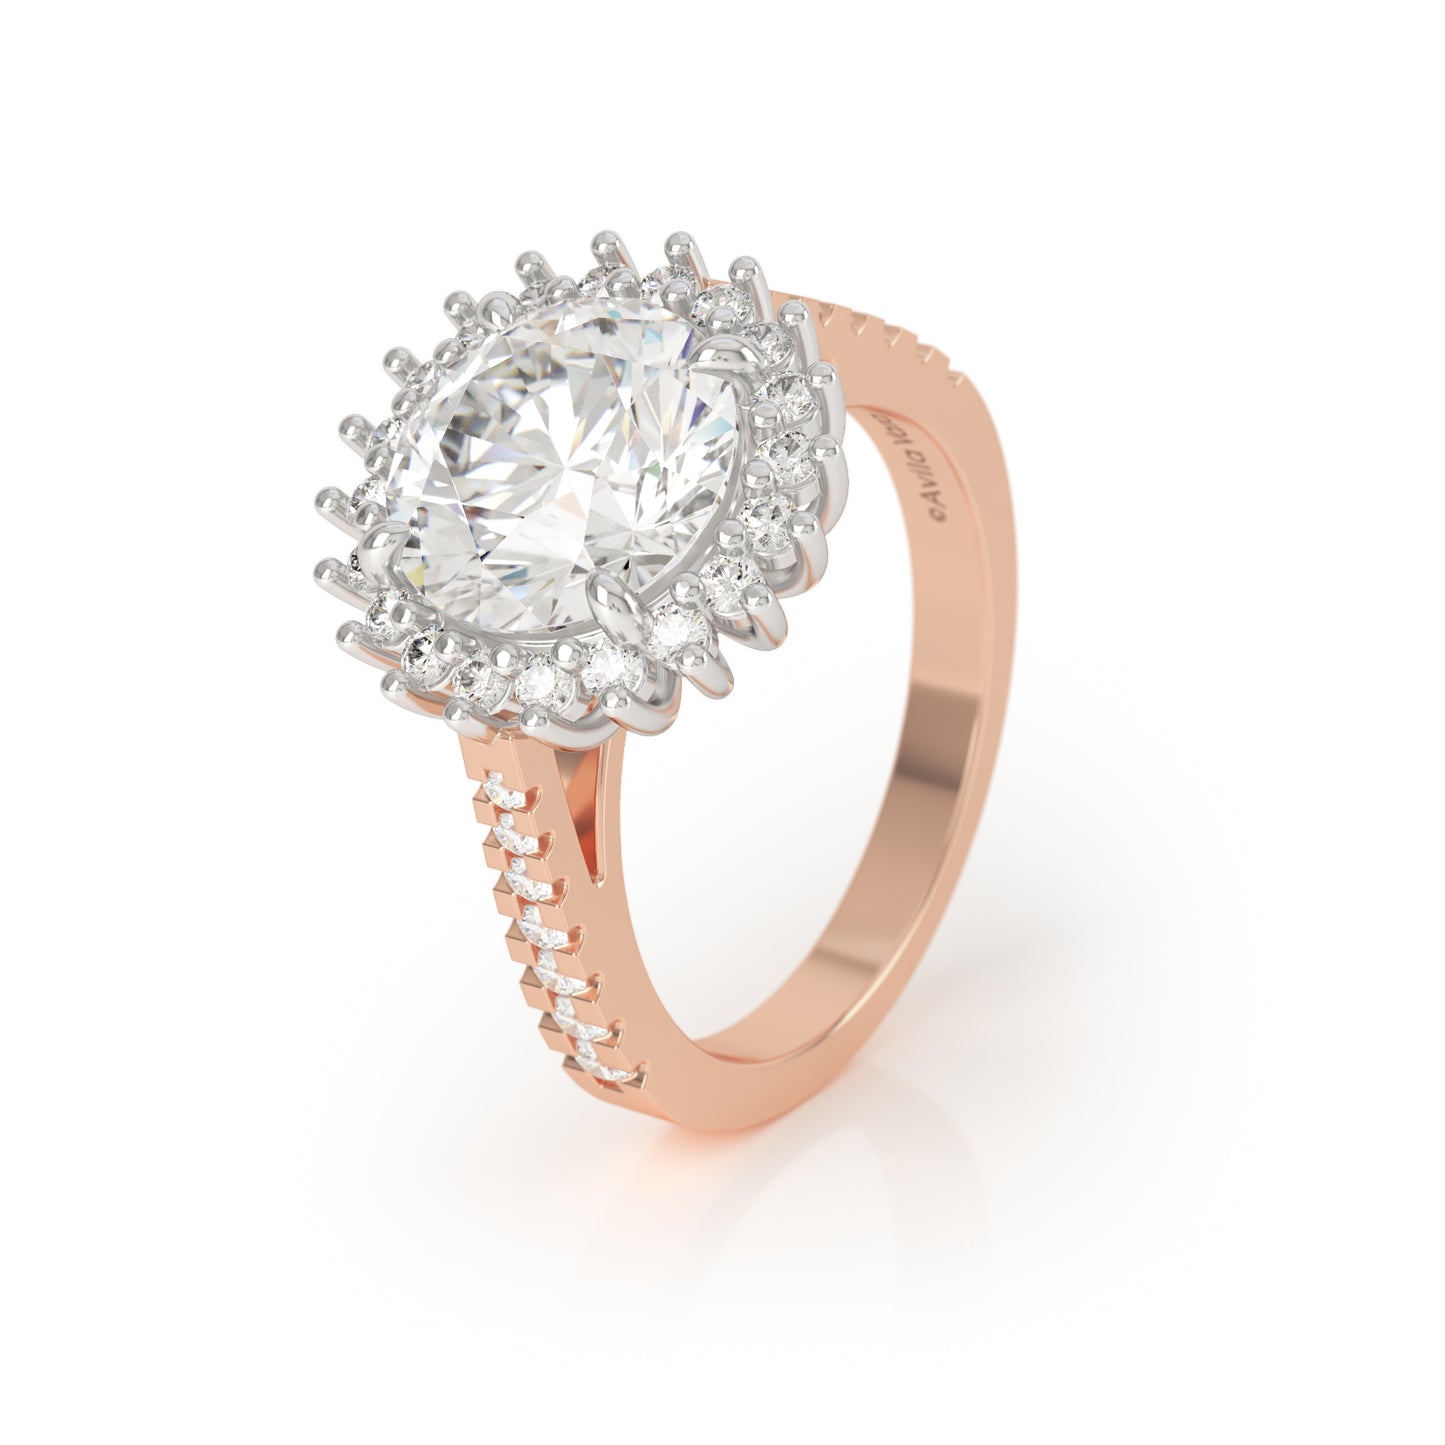 Asteri Luxe 3.5ct Diamond Ring in Rose Gold and Platinum - Avila Vara